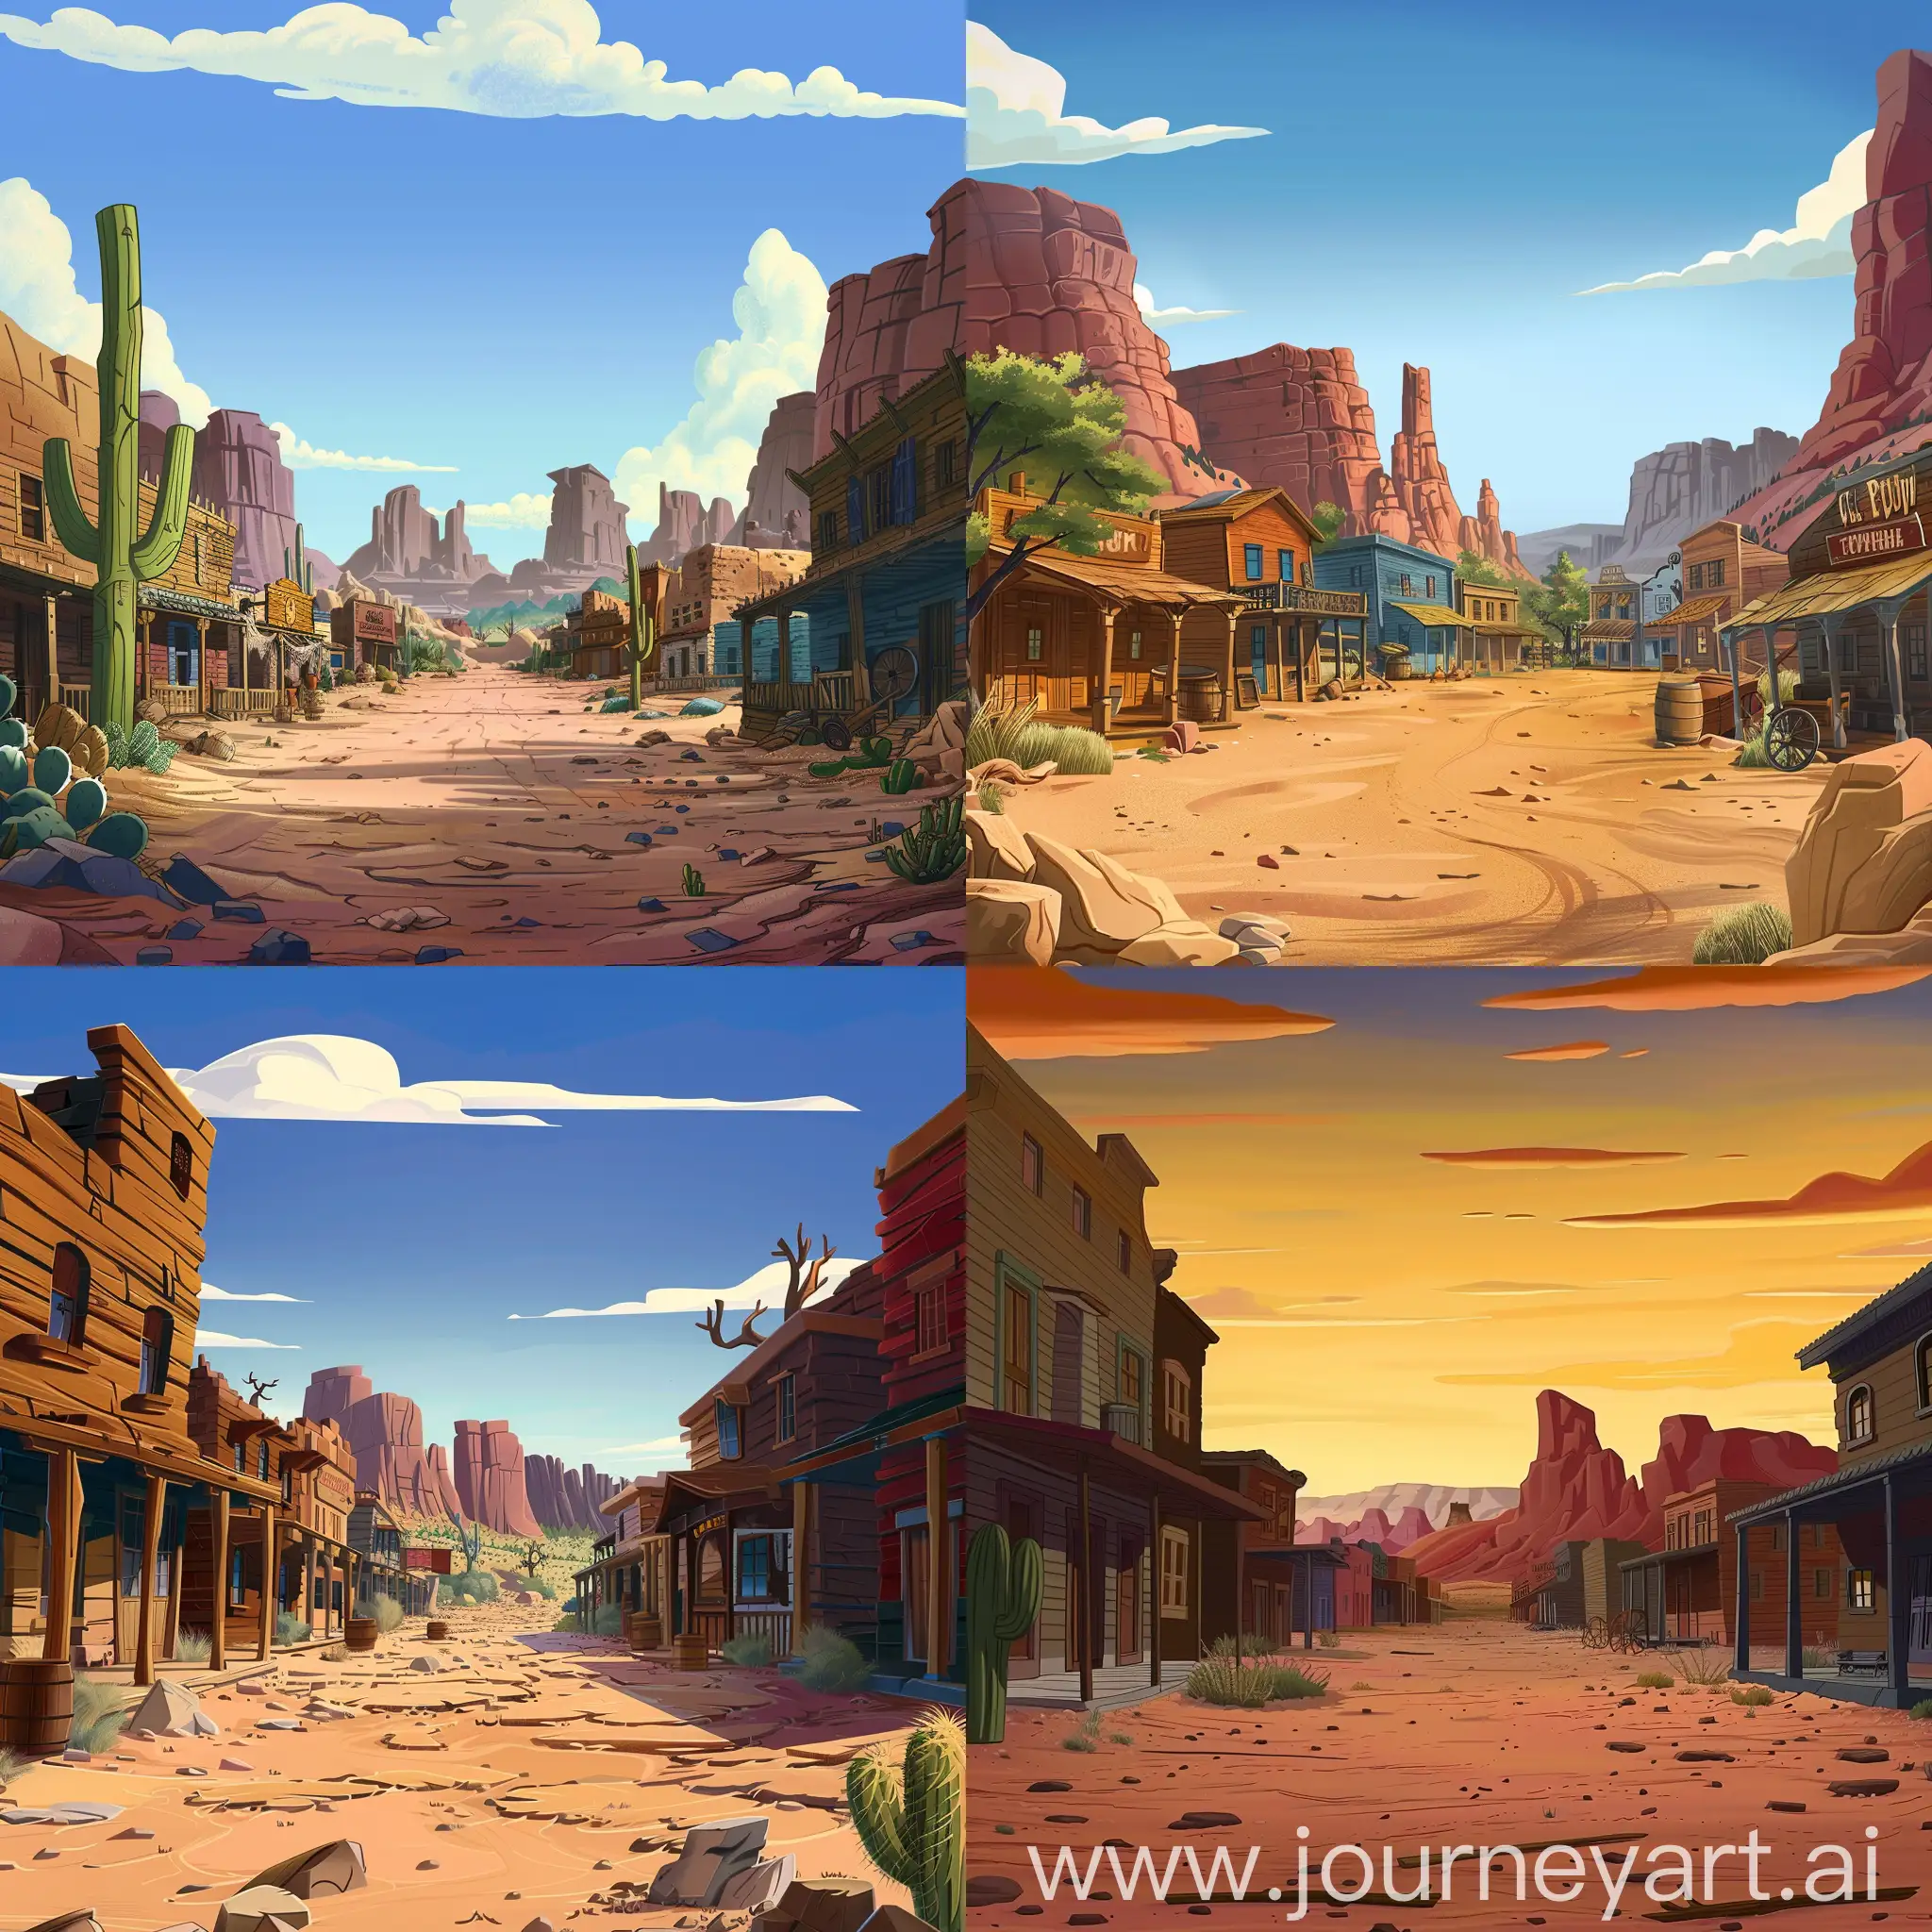 Disney-Animation-Wild-West-Scene